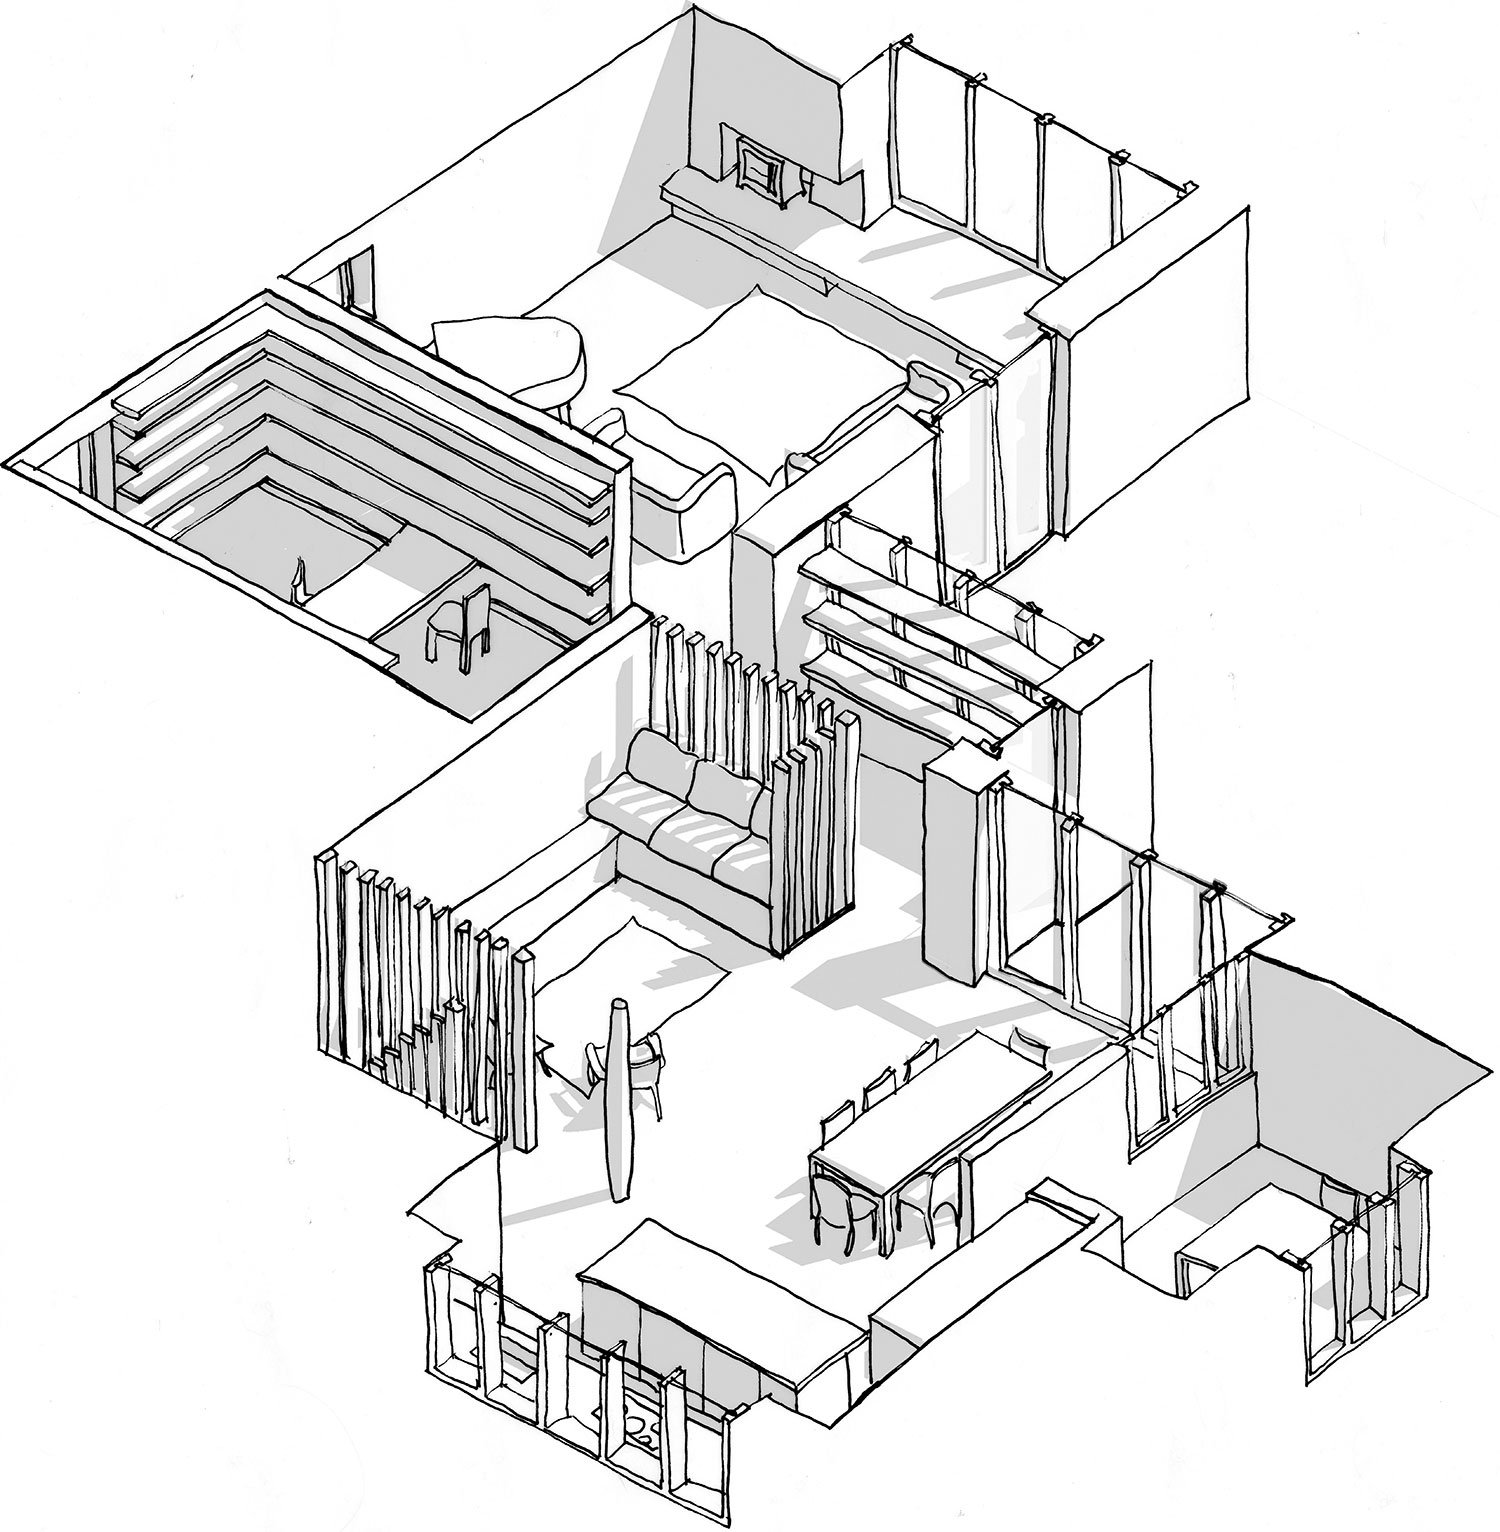 Cambridge-House-Retrofit-Passivhaus-prewett-bizley-architects-axo-sketch.jpg